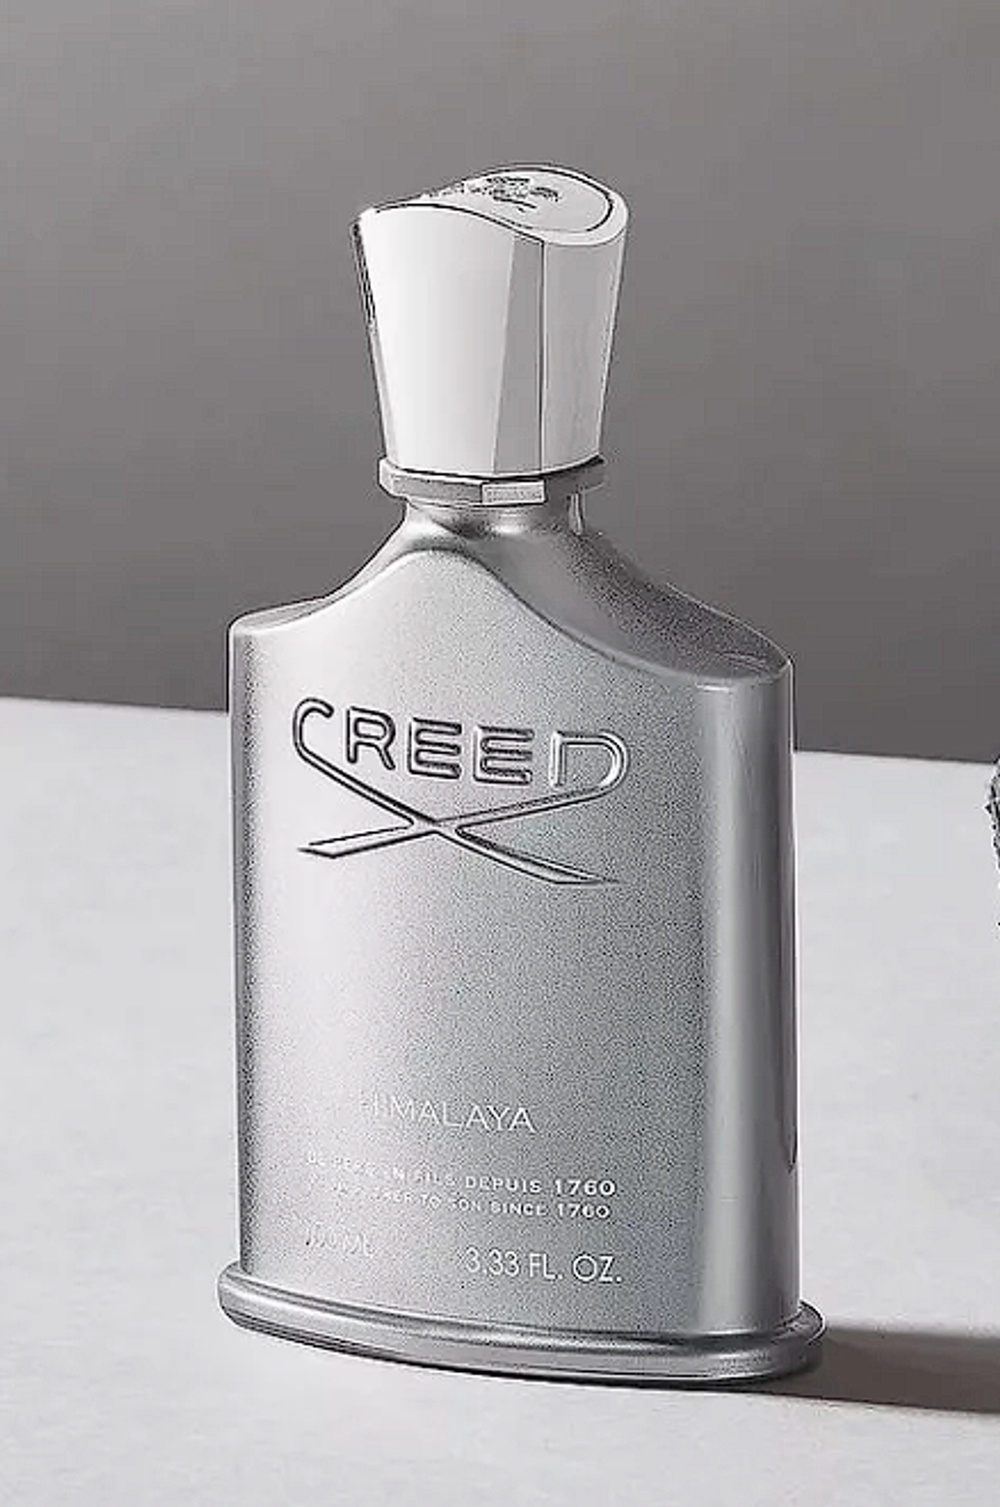 Creed Himalaya 100ml (duty free парфюмерия)